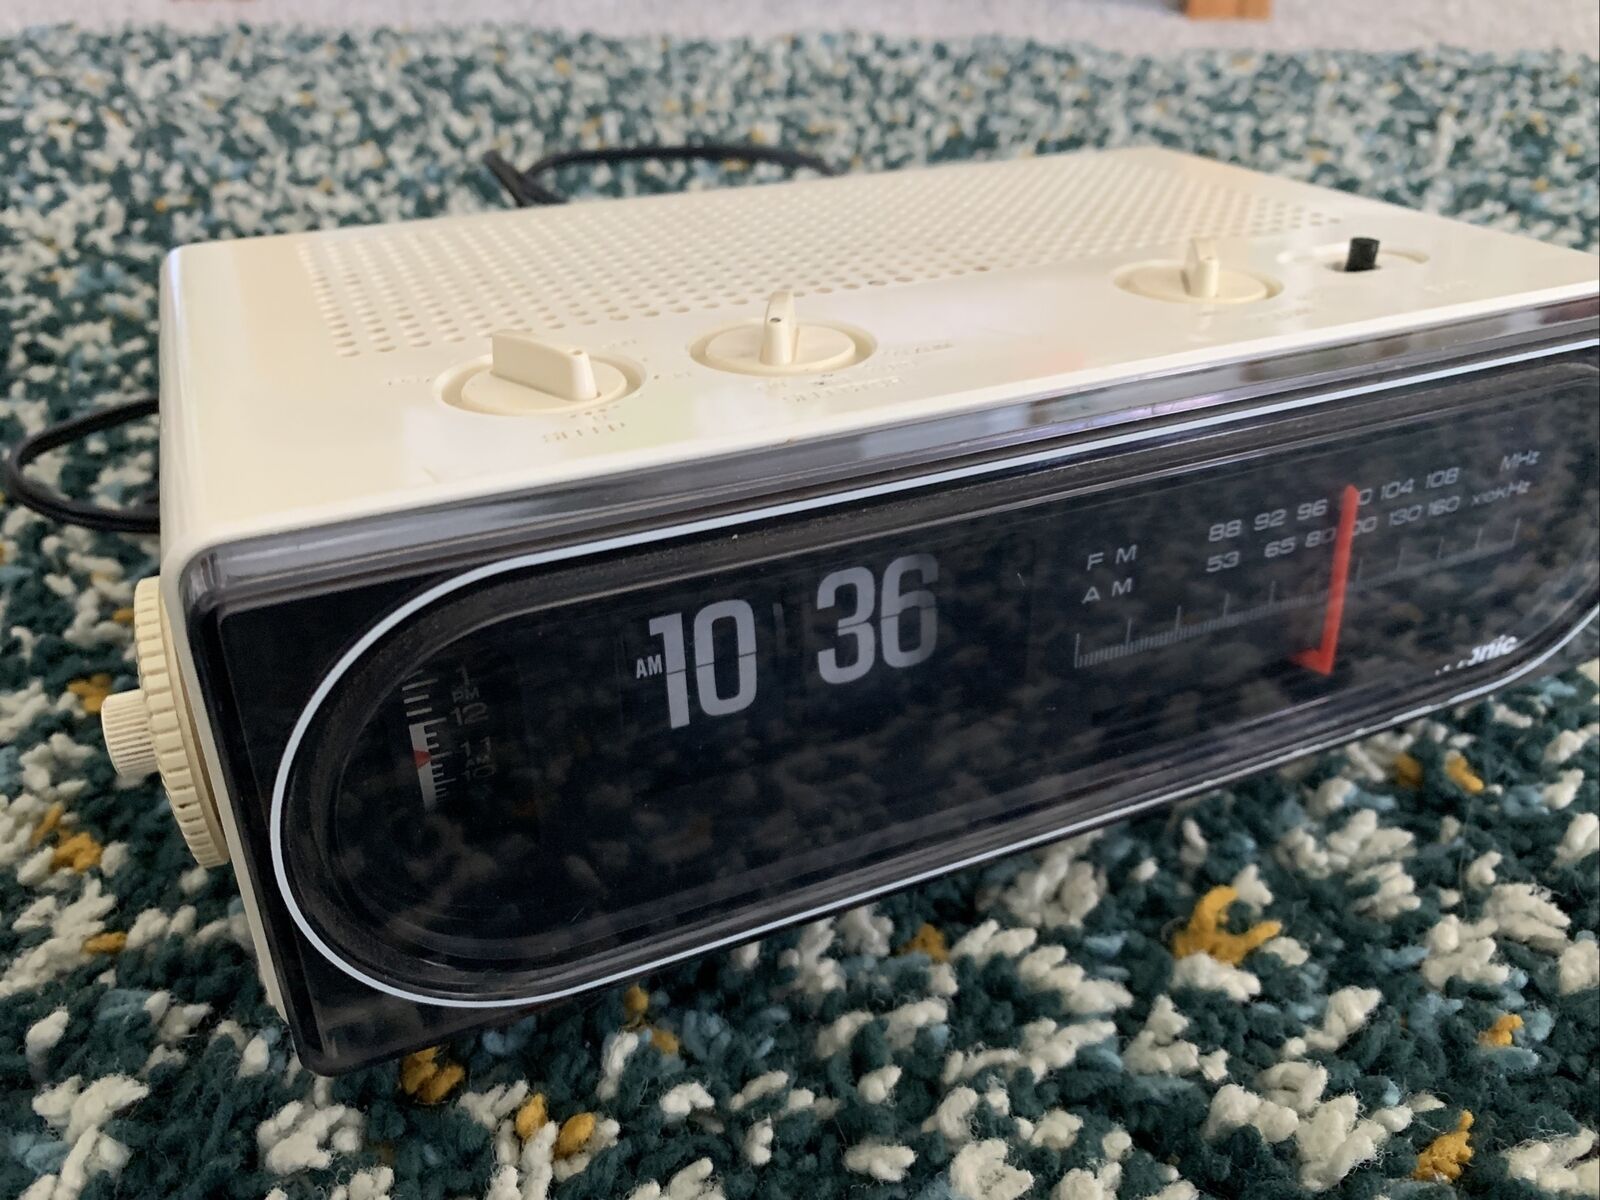 Vtg PANASONIC Flip Clock Radio RC 6010 - Clock Works, Radio Doesnt Groundhog Day